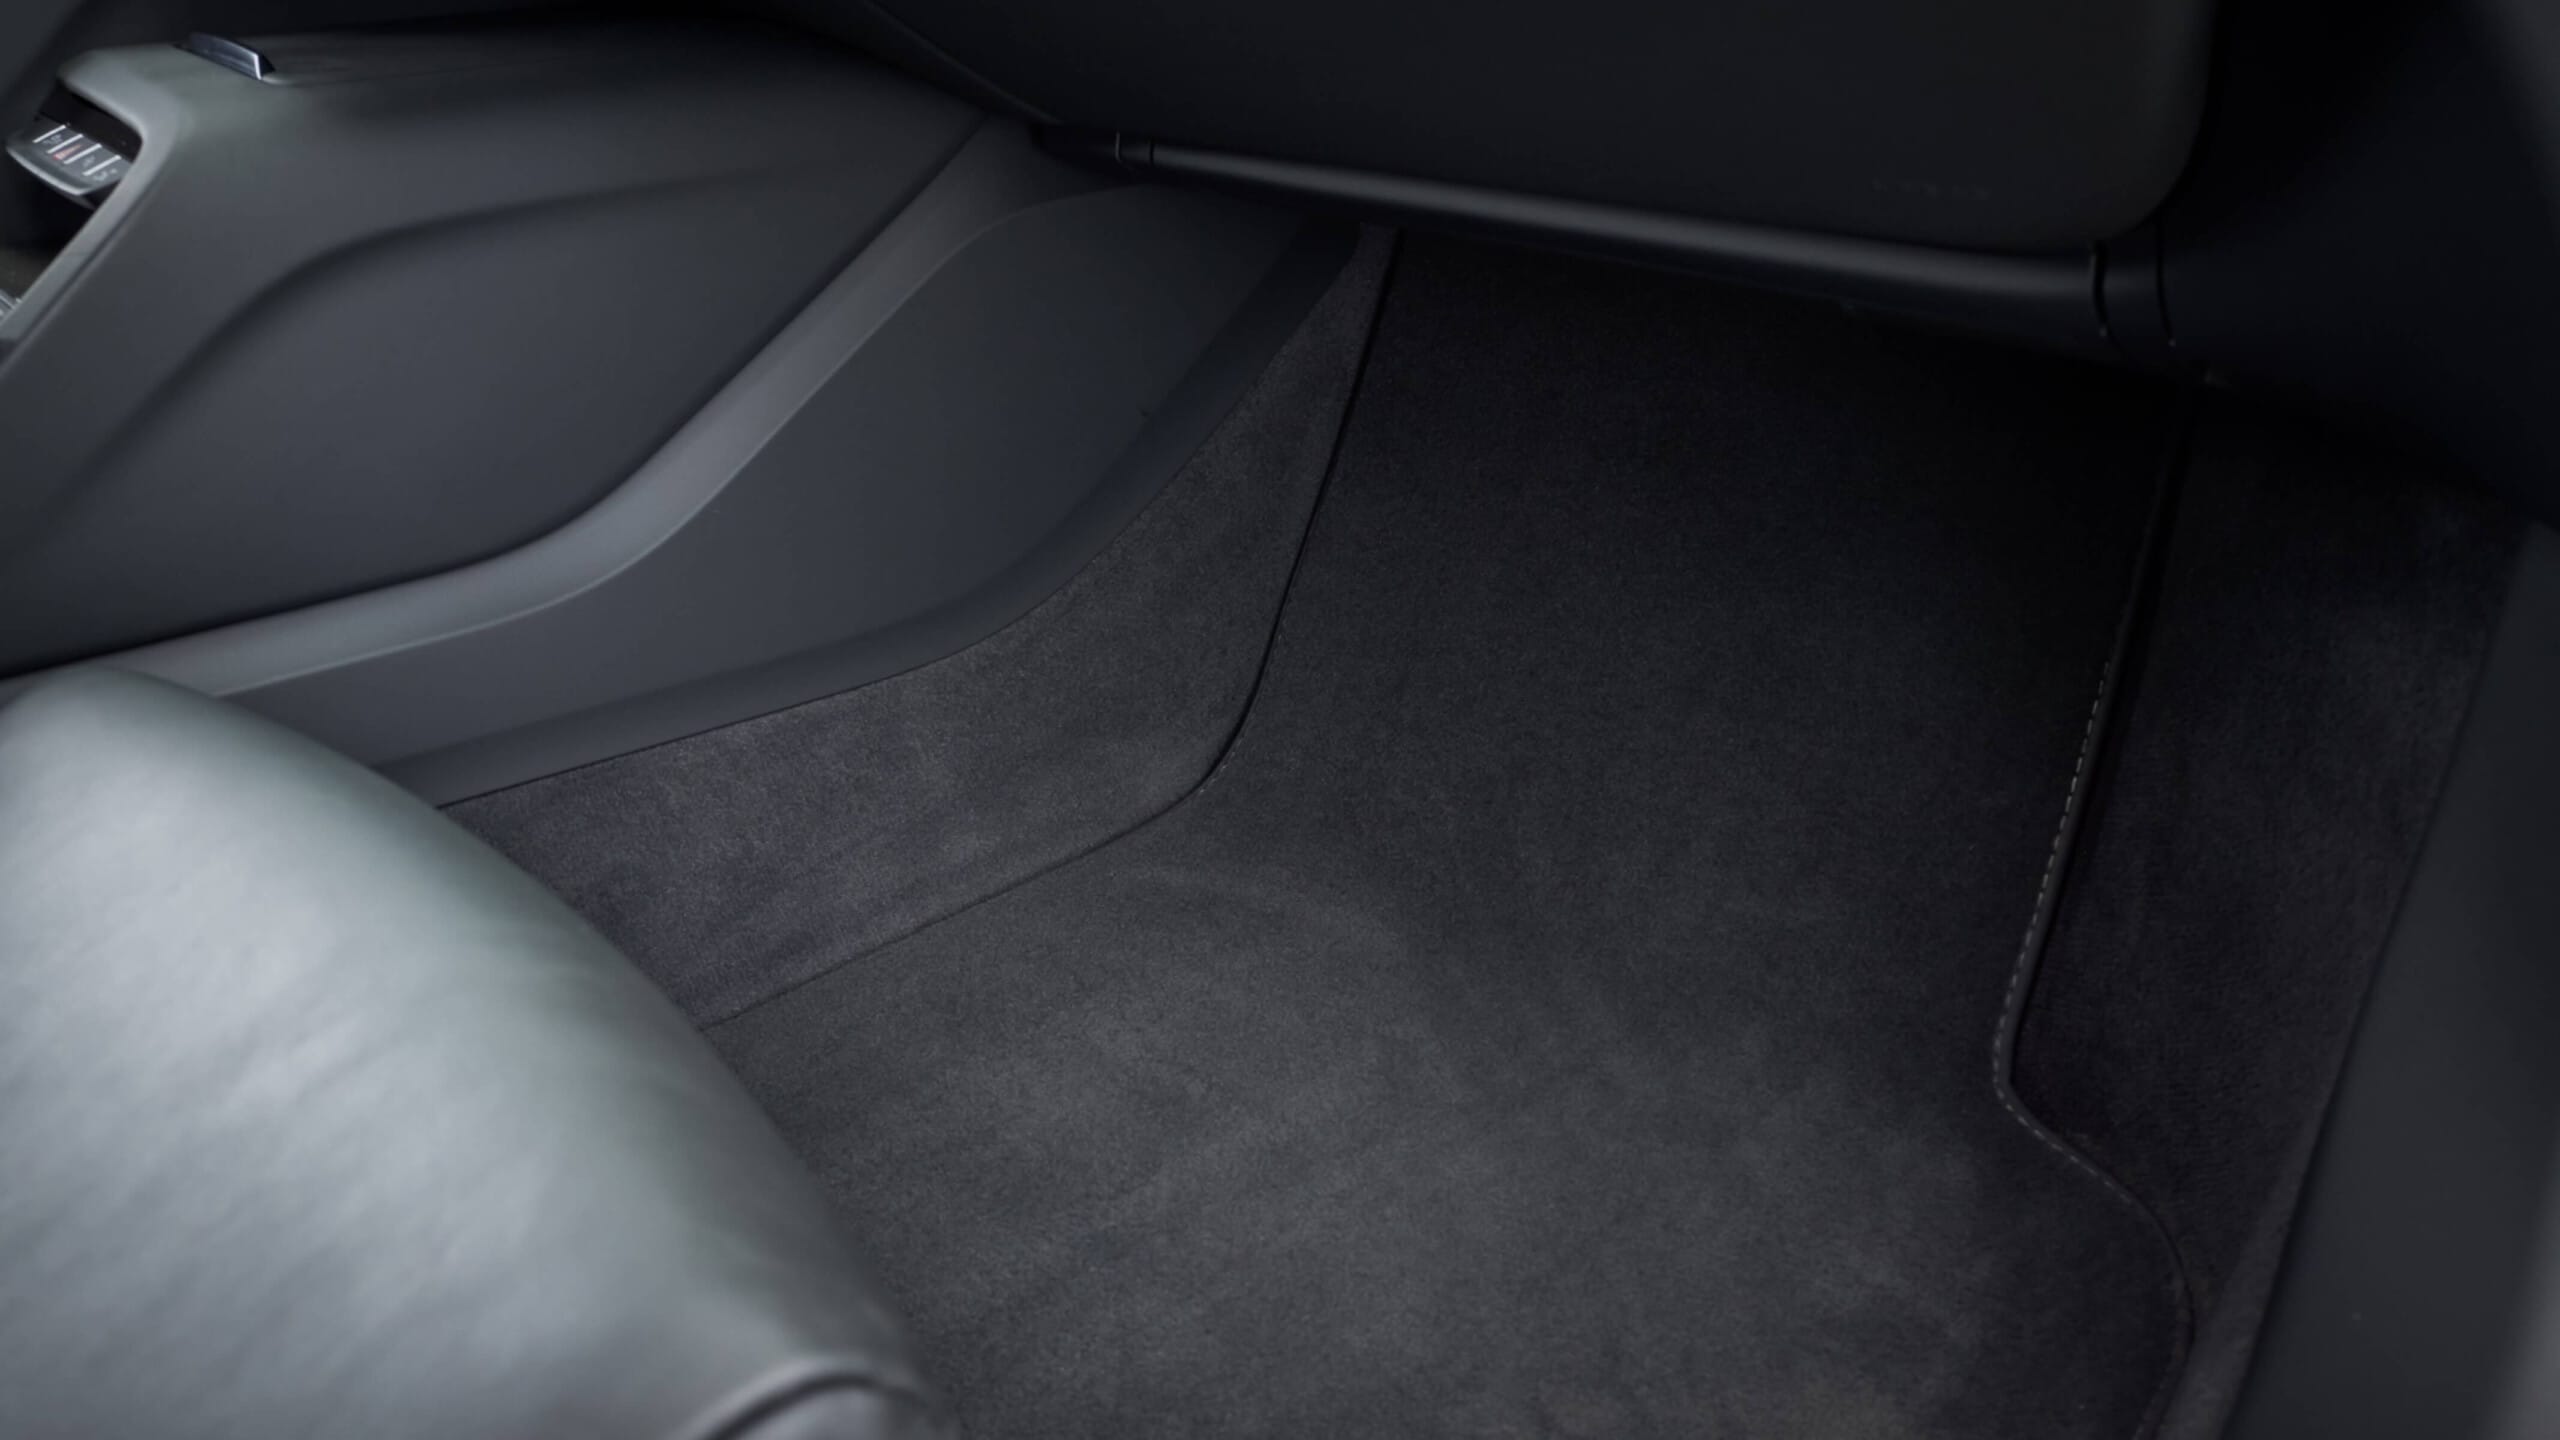 Passenger seat All-weather floor mats inside of cars